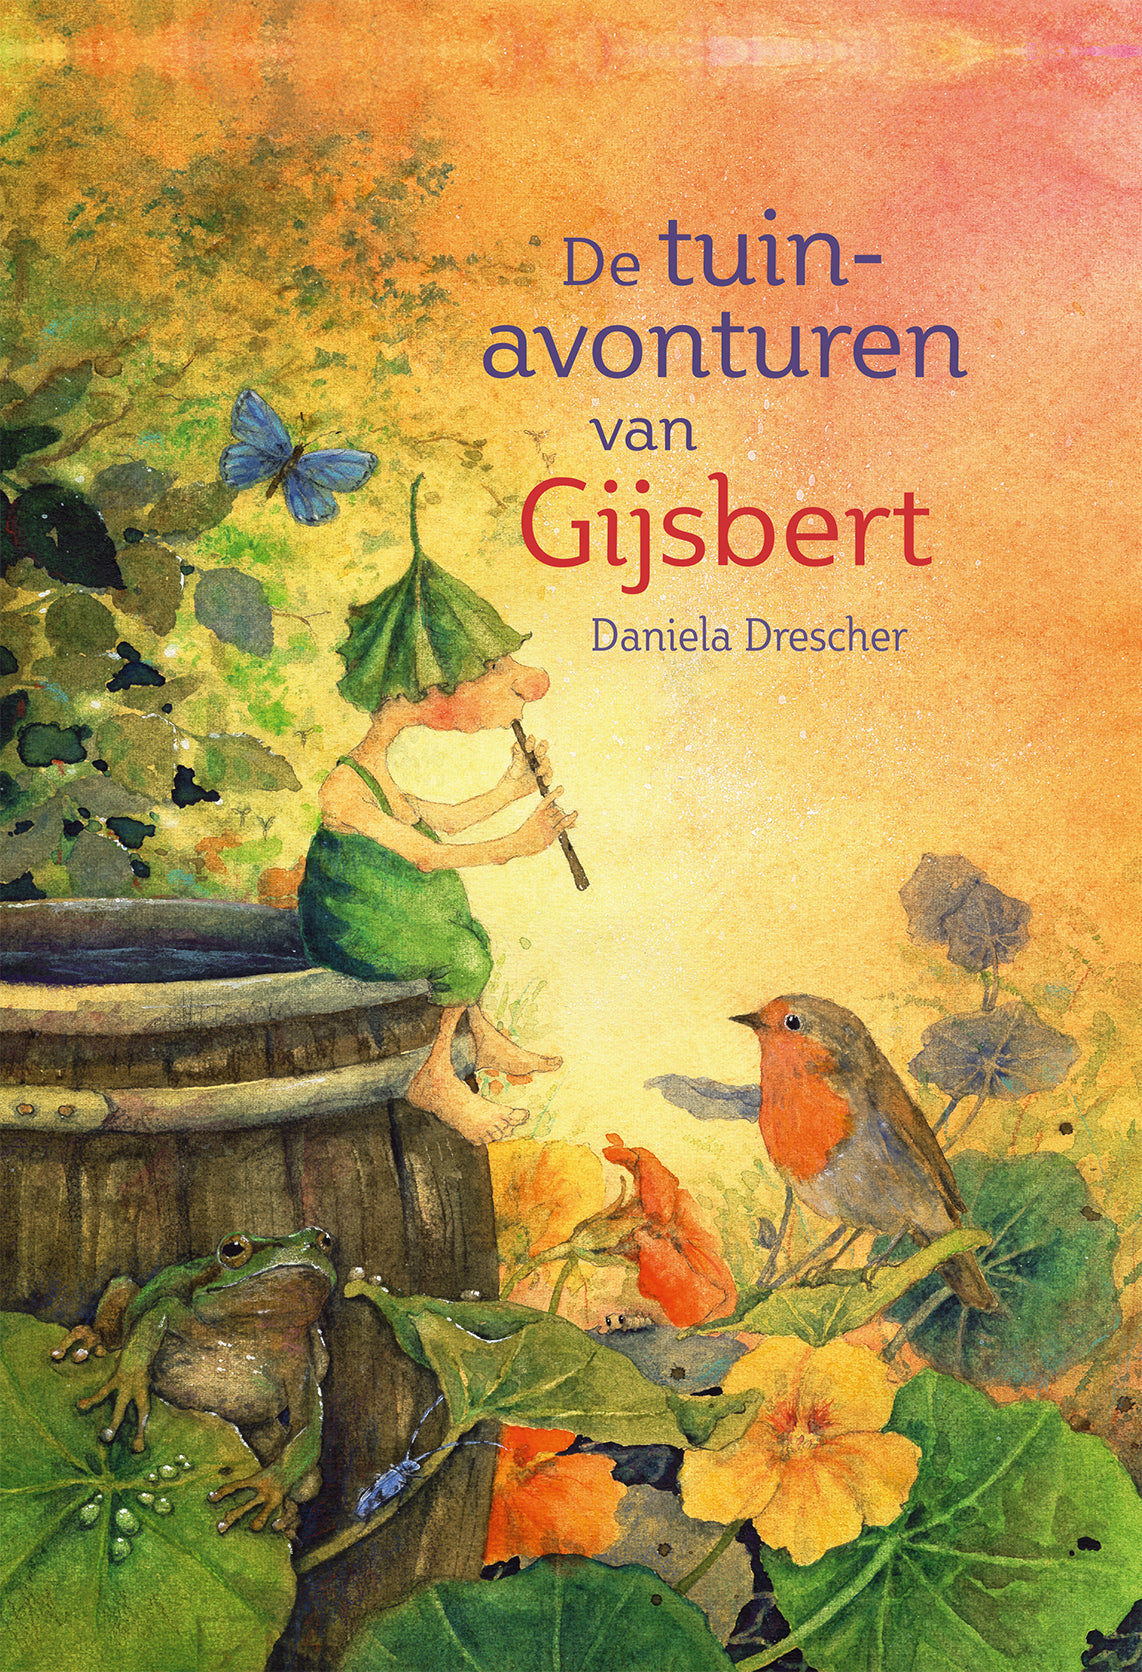 Gijsbert Daniela Drescher Toverlux Lamp Storylux Seasonal decor